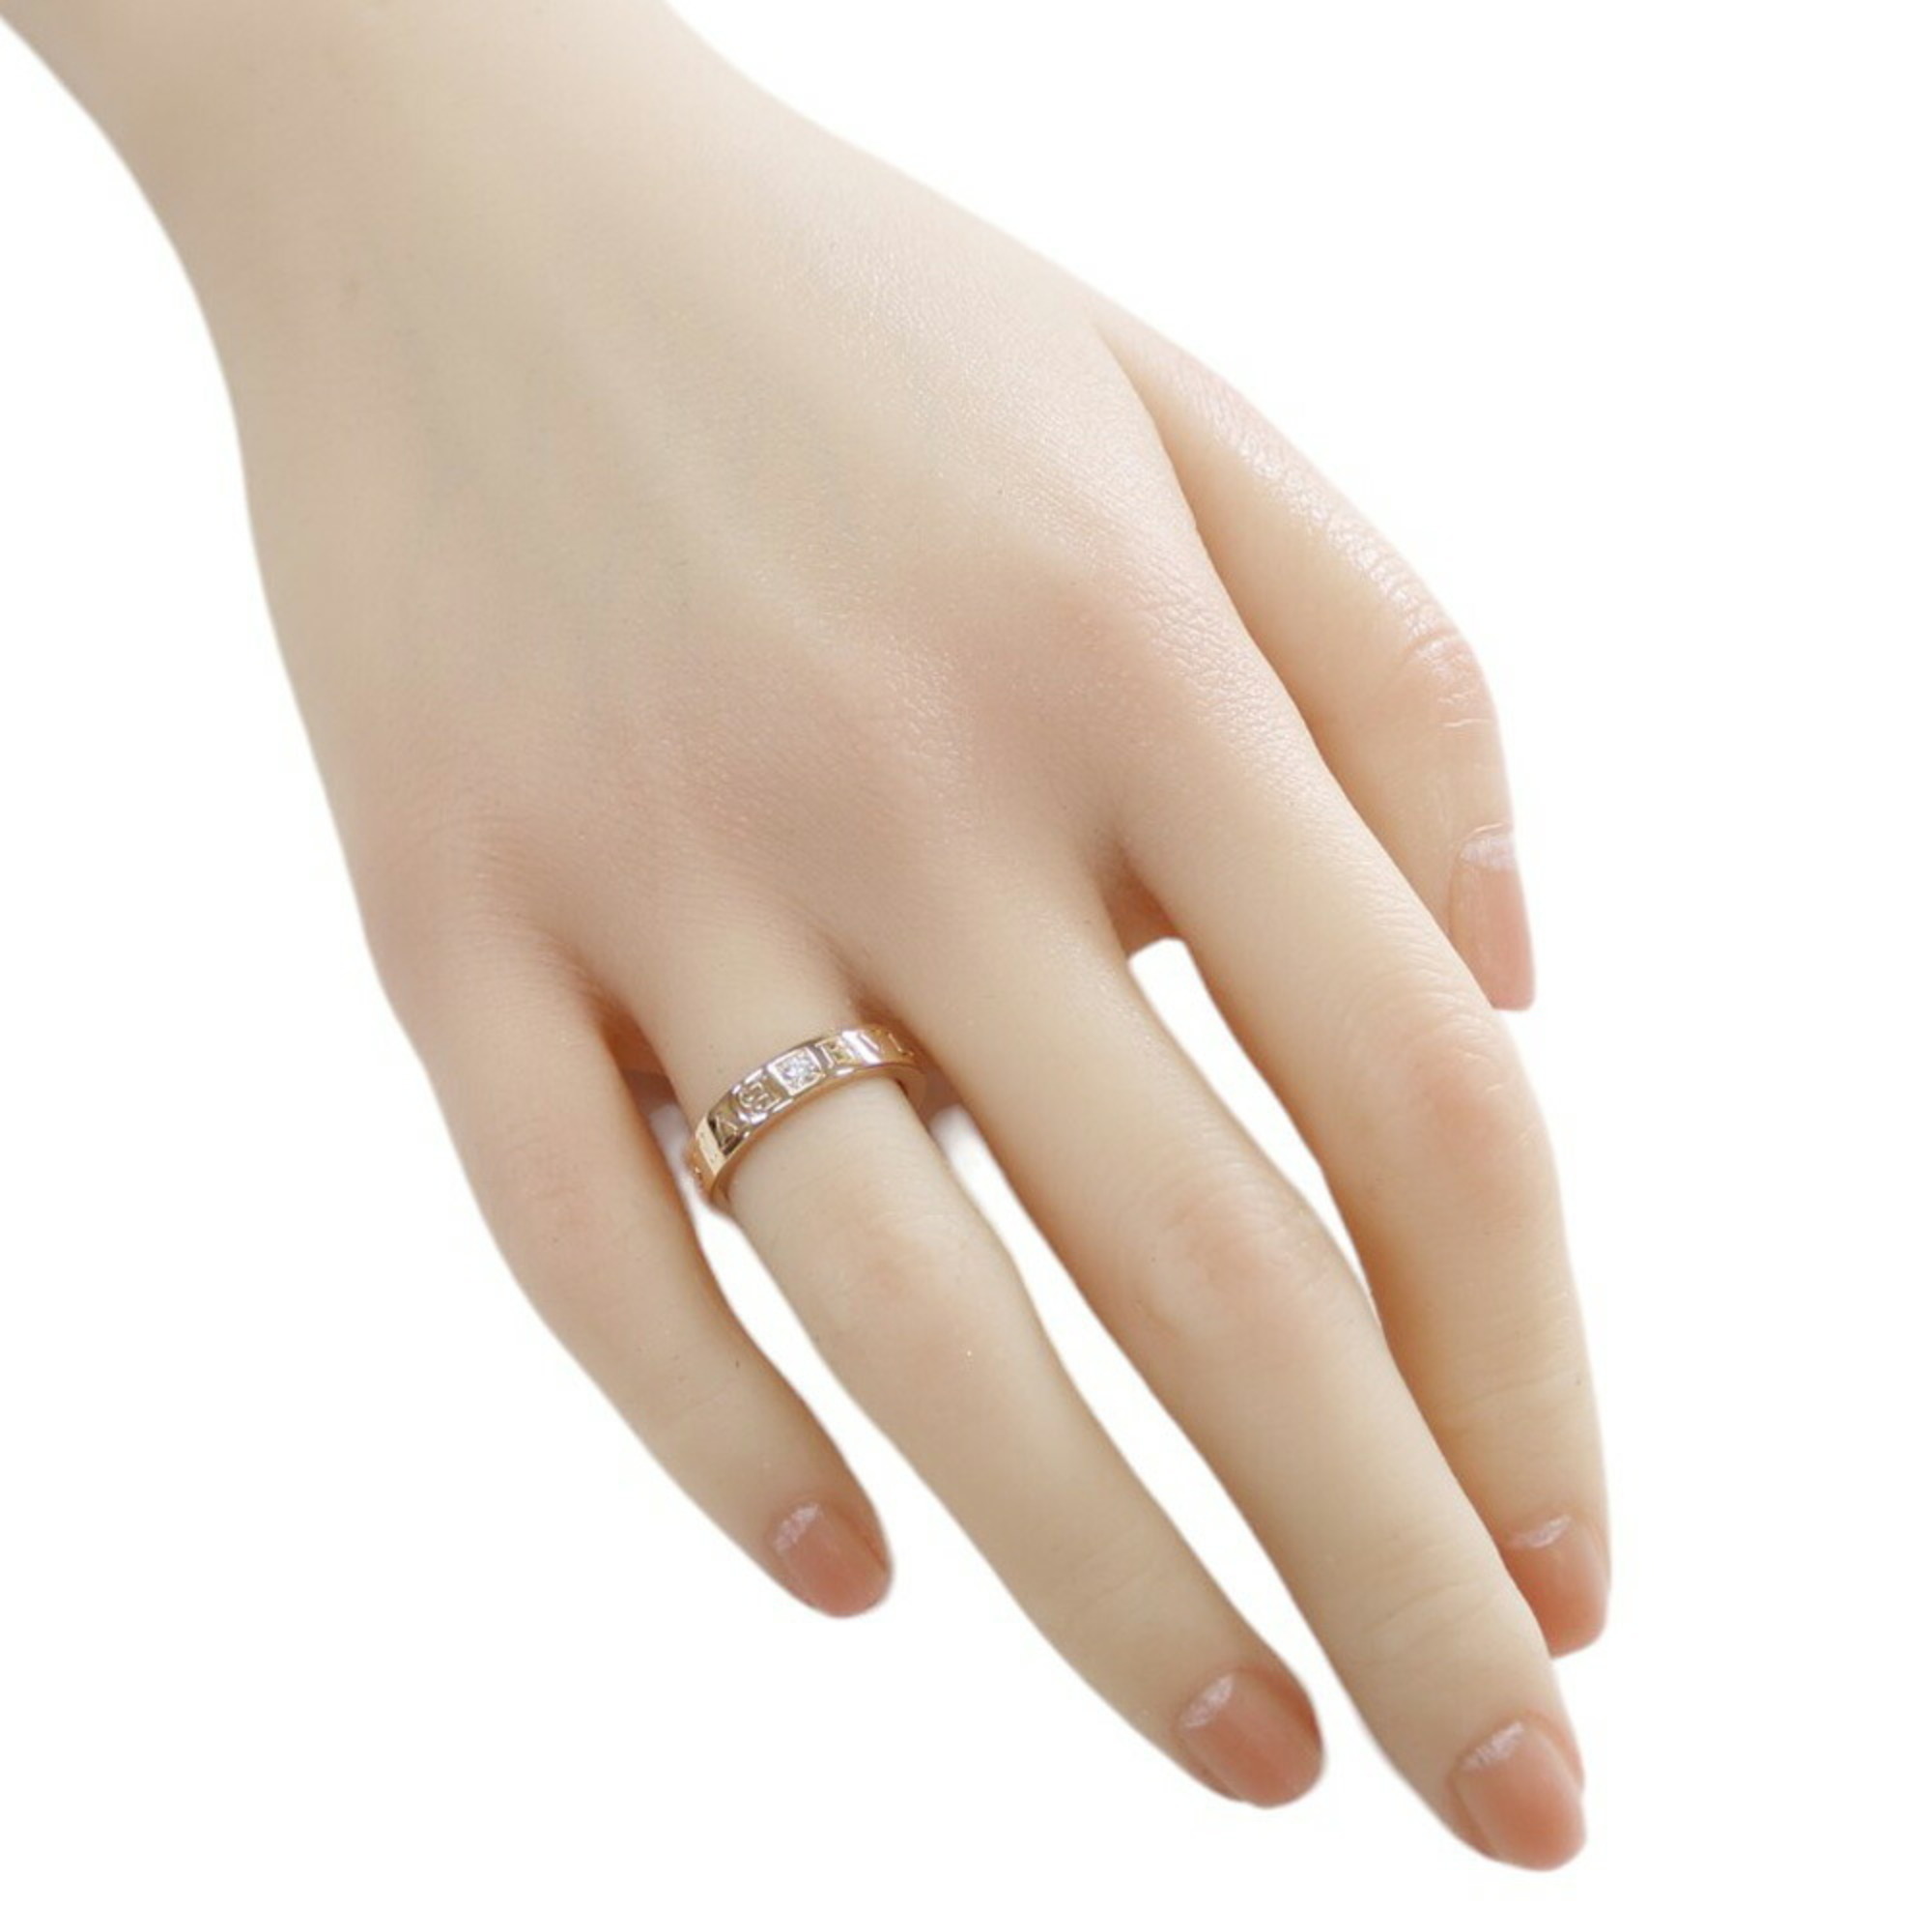 BVLGARI Ring Size 8.5 18K Diamond Women's